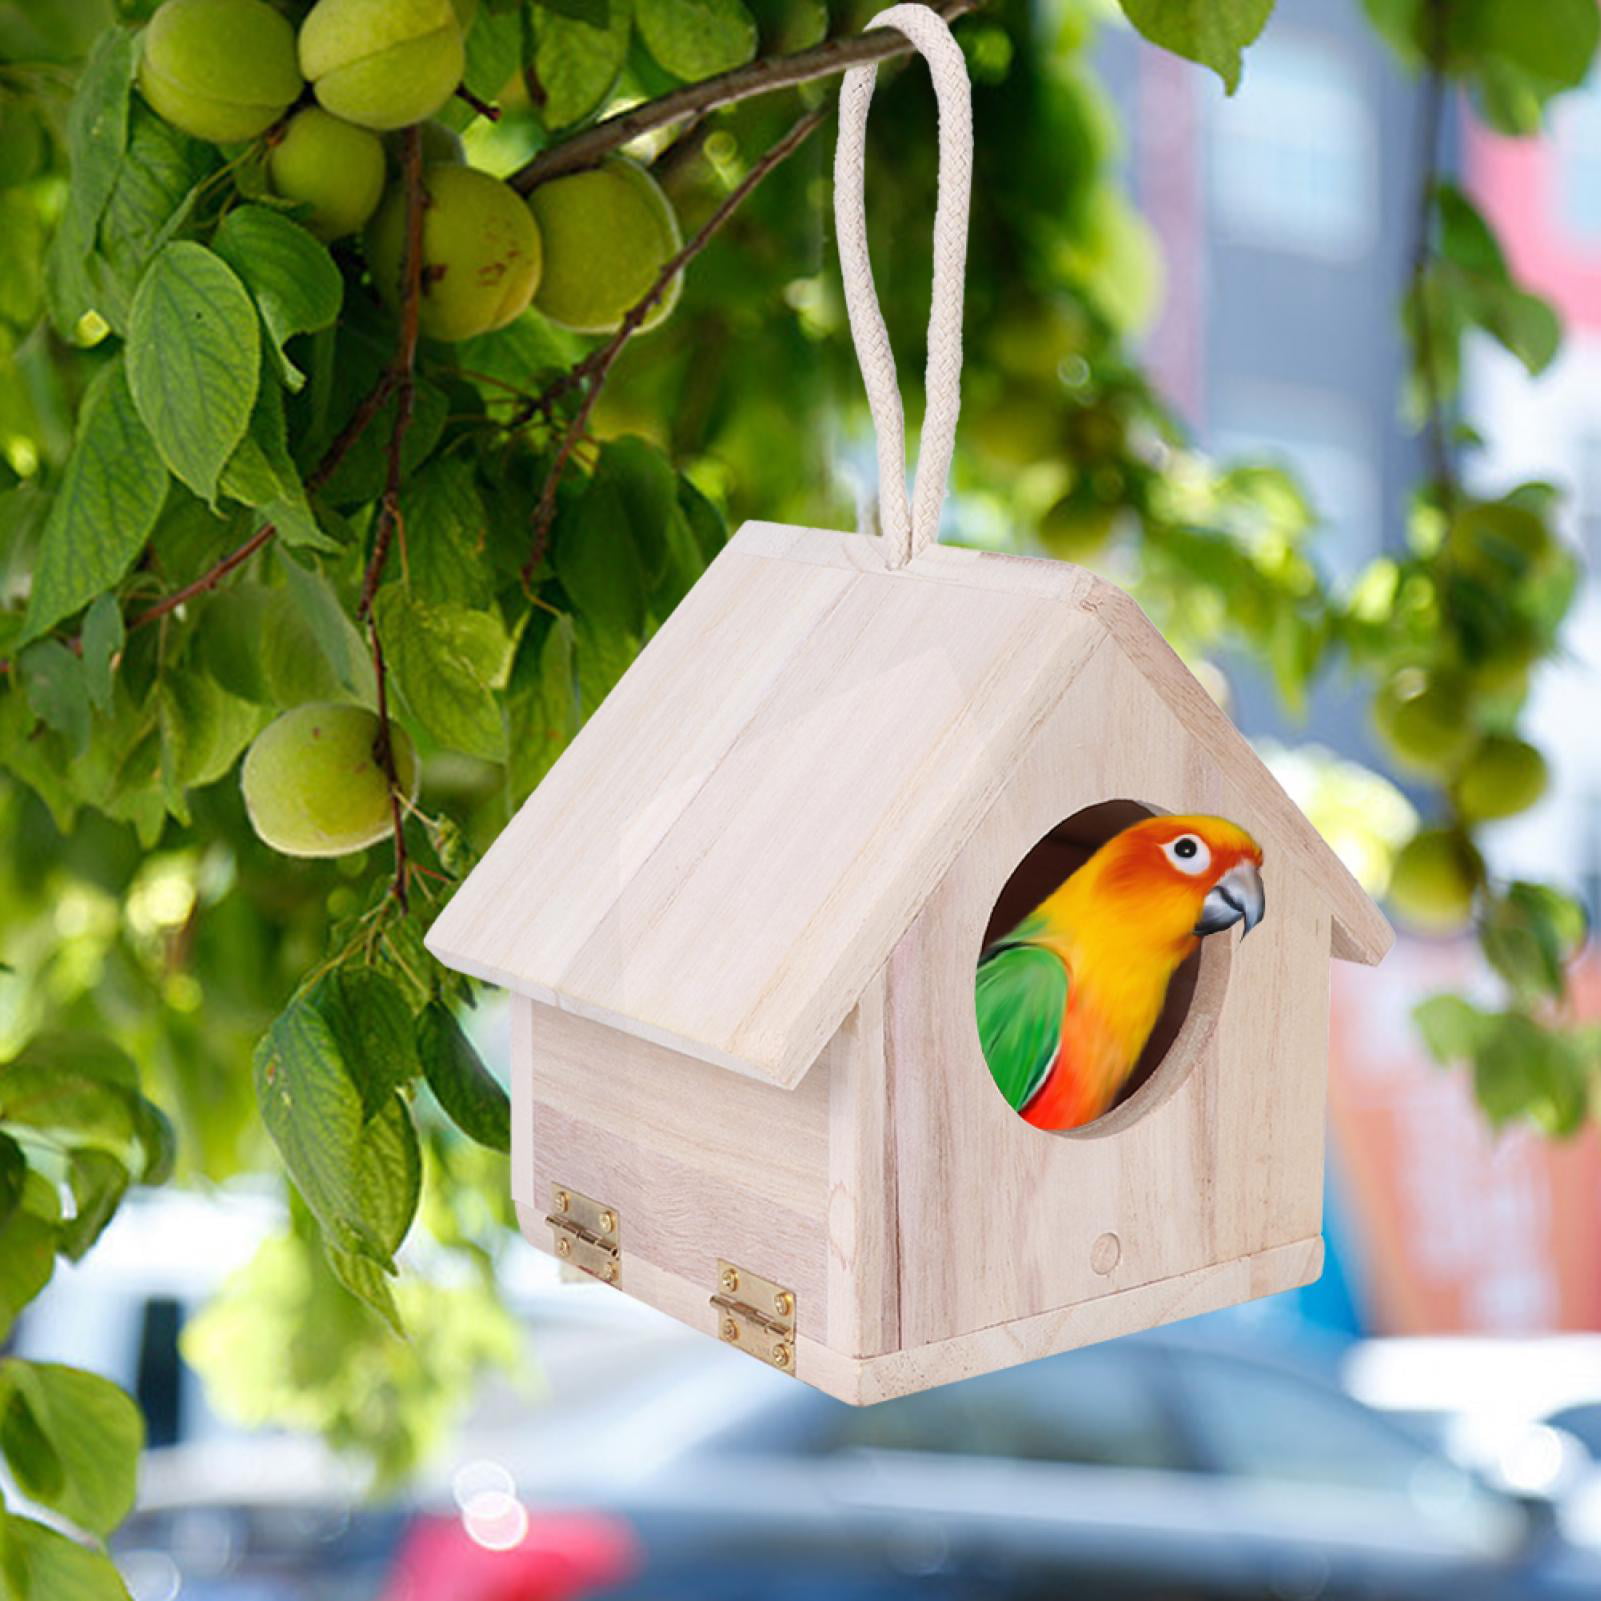 Details about   Wooden Bird House Nest Box Birdhouse Pet Cage Breeding Feeder Outdoor Decoration 